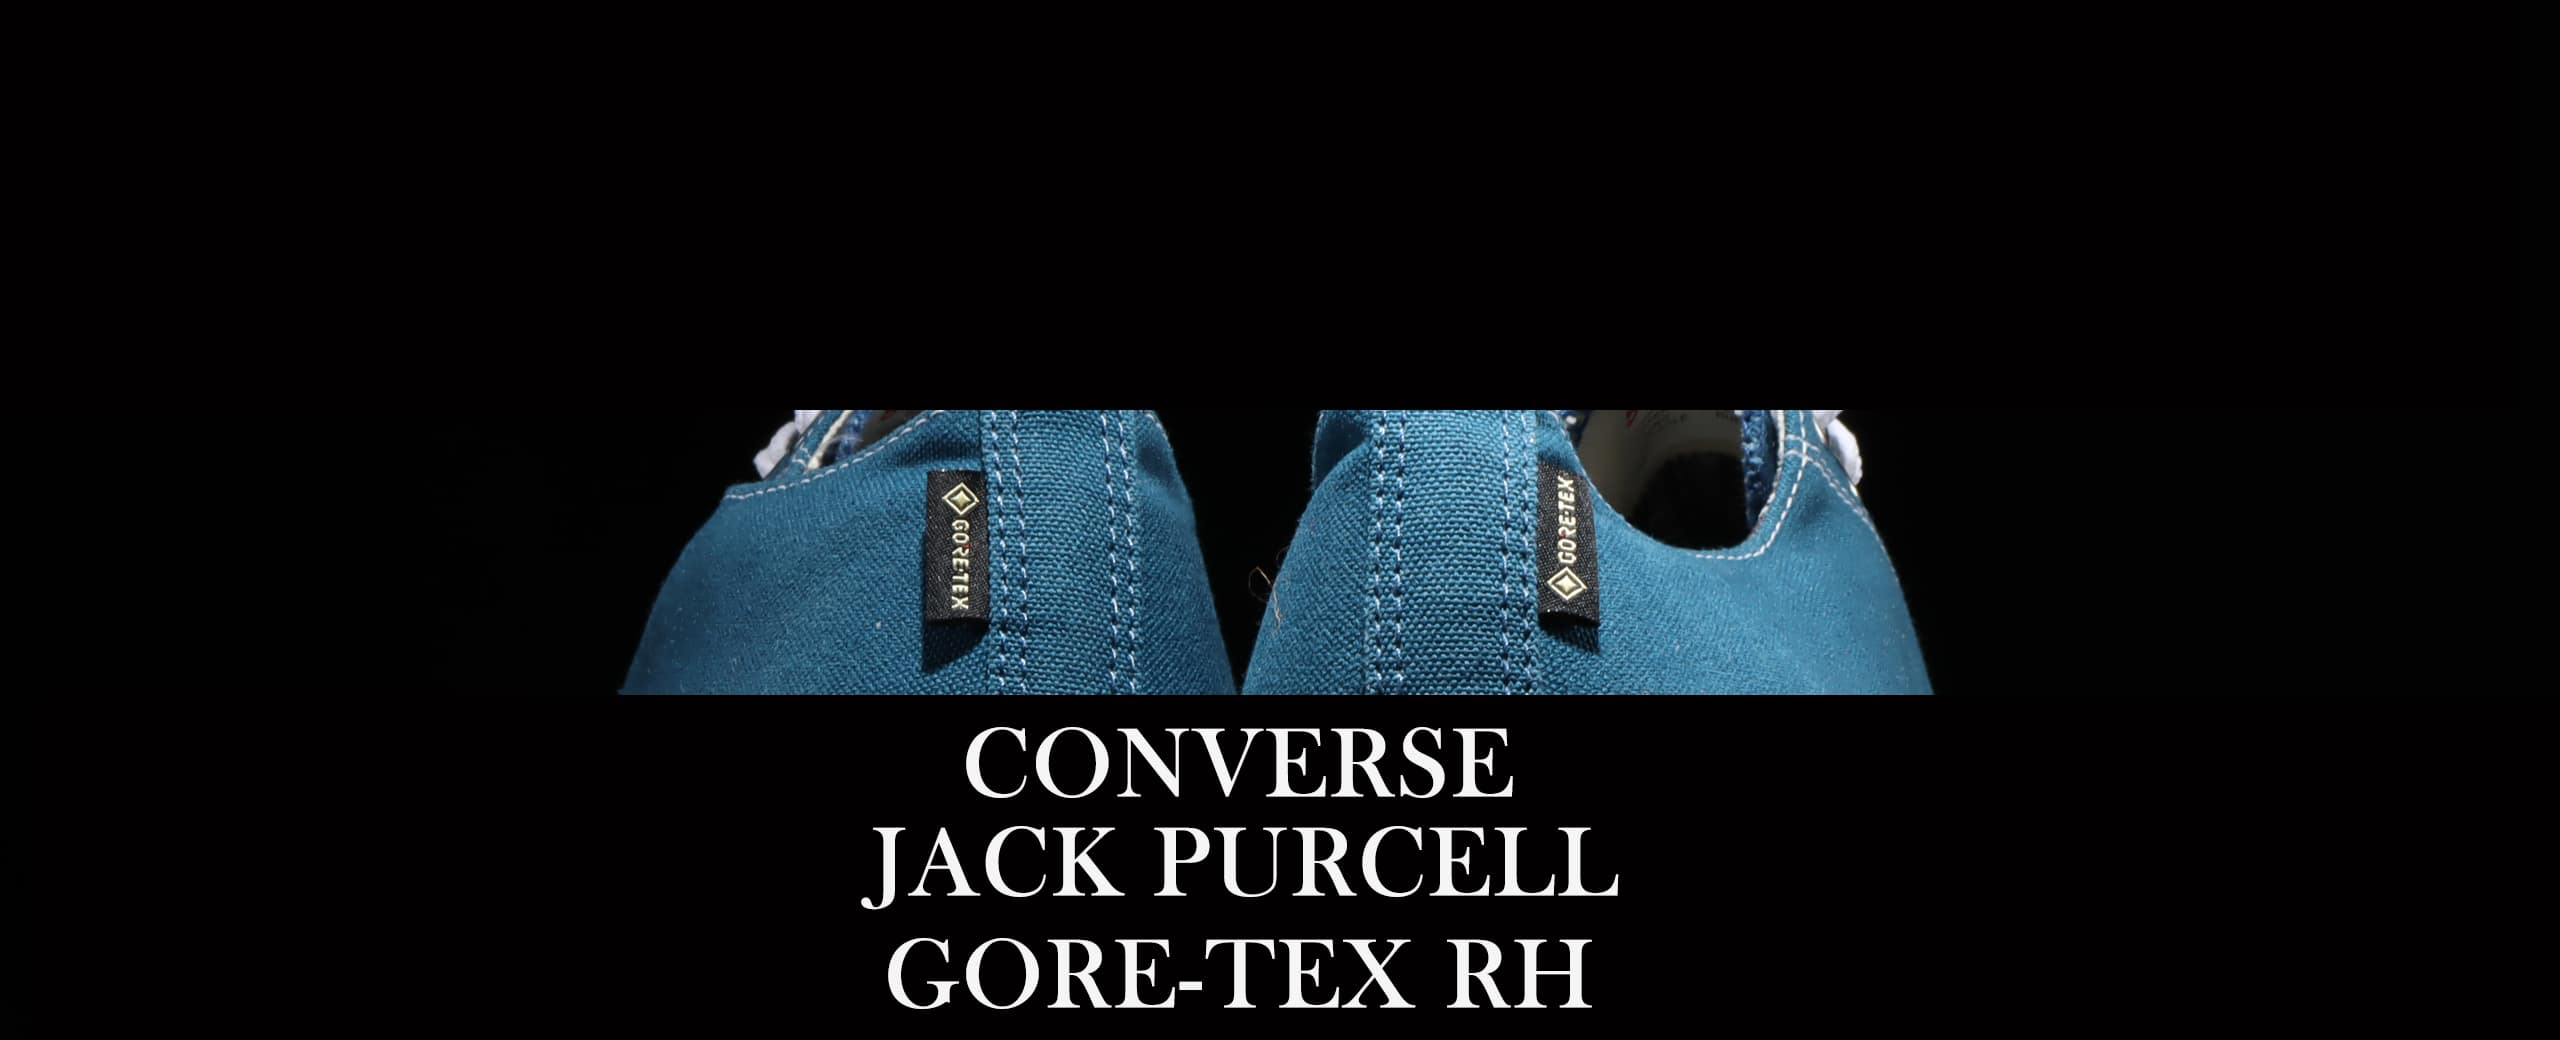 "CONVERSE JACK PURCELL GORE-TEX RH"